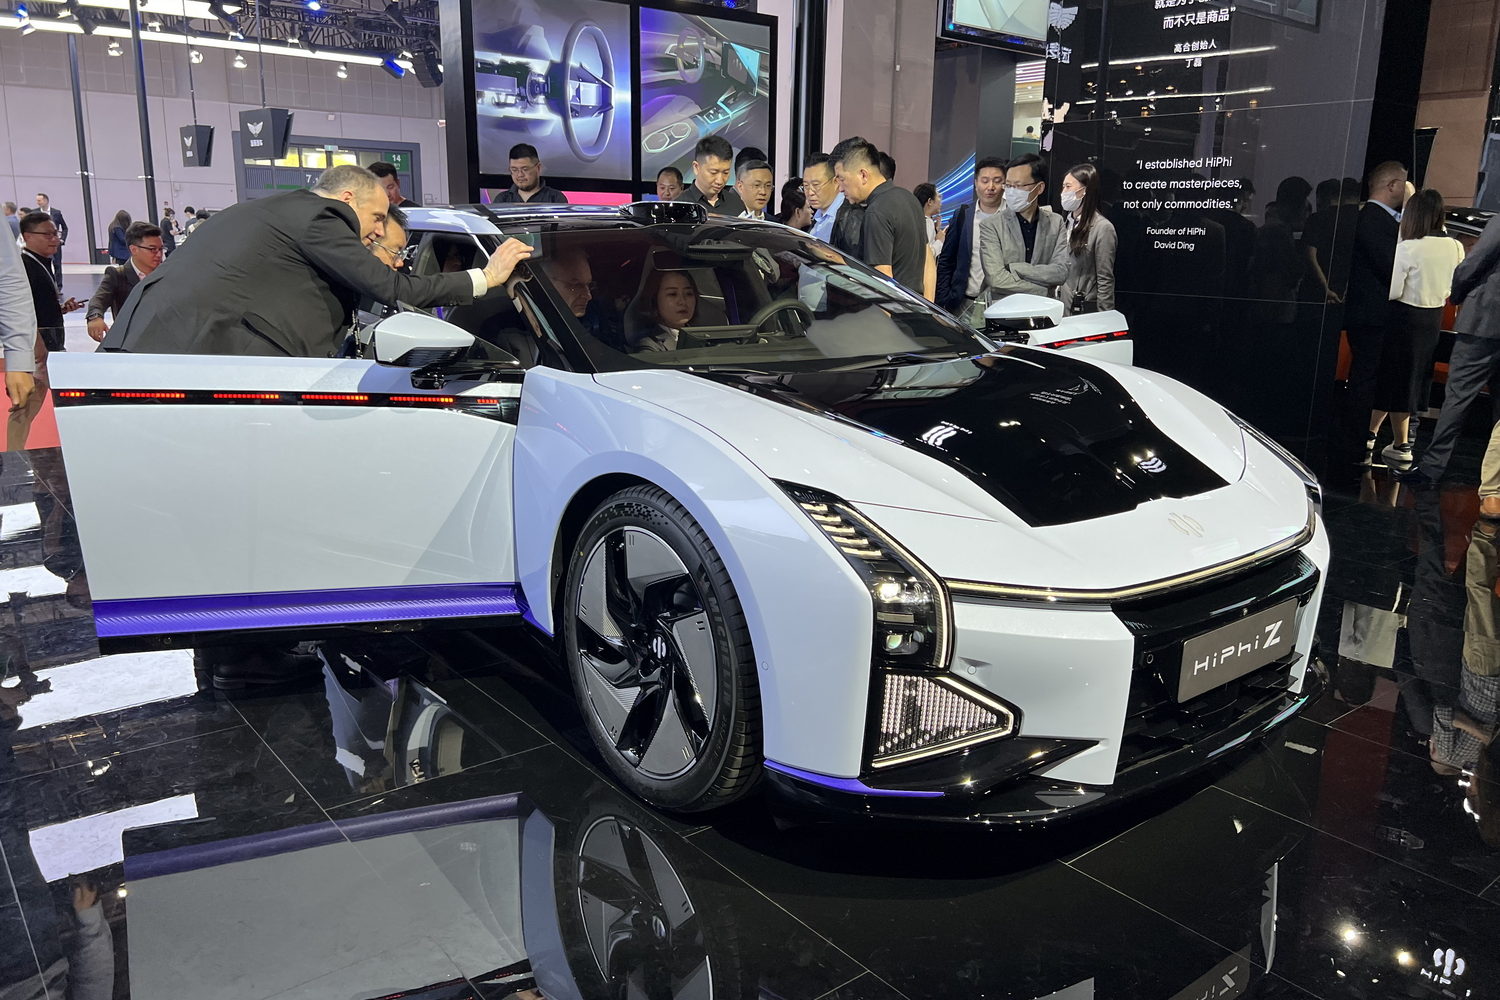 Auto Shanghai re-energises the motor show